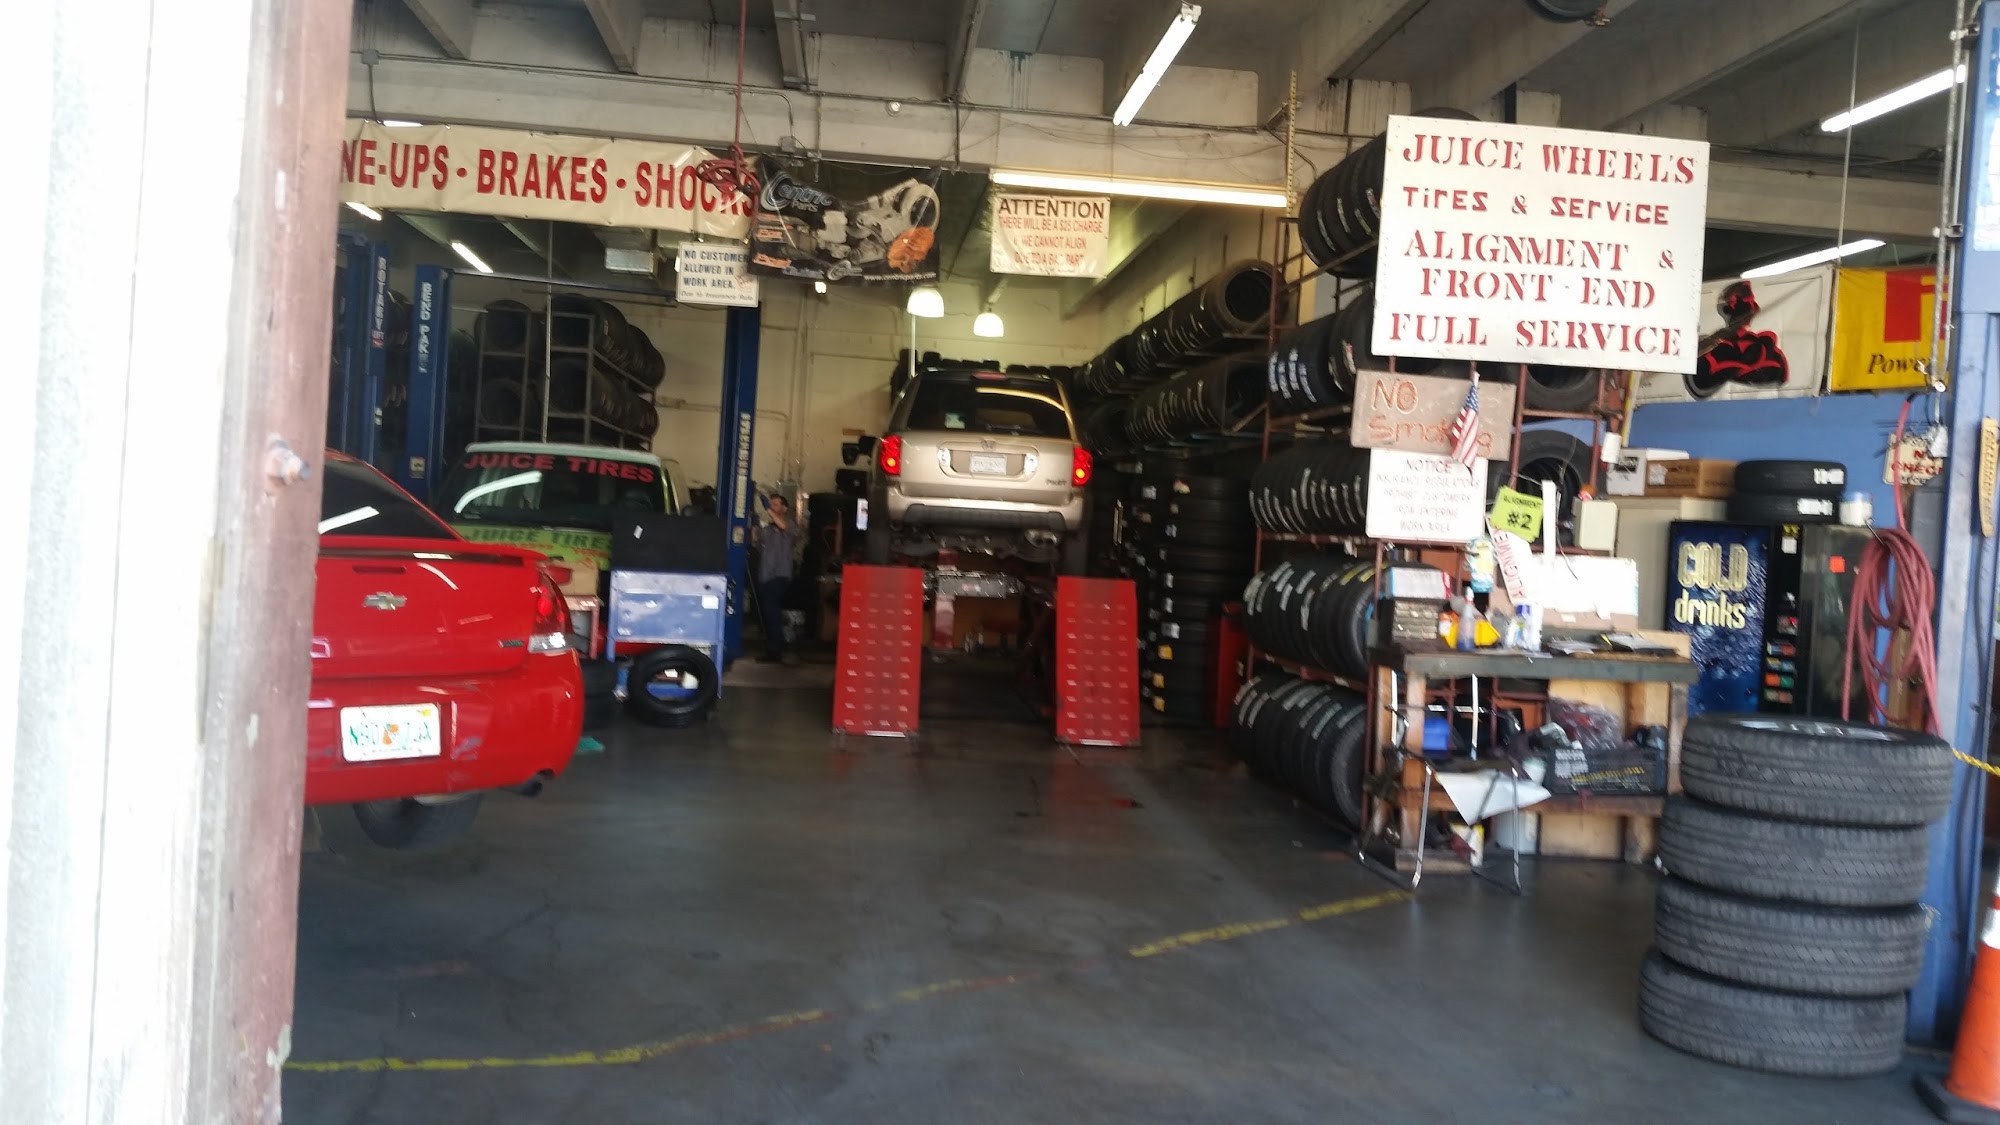 Juice Wheels Tires & Services